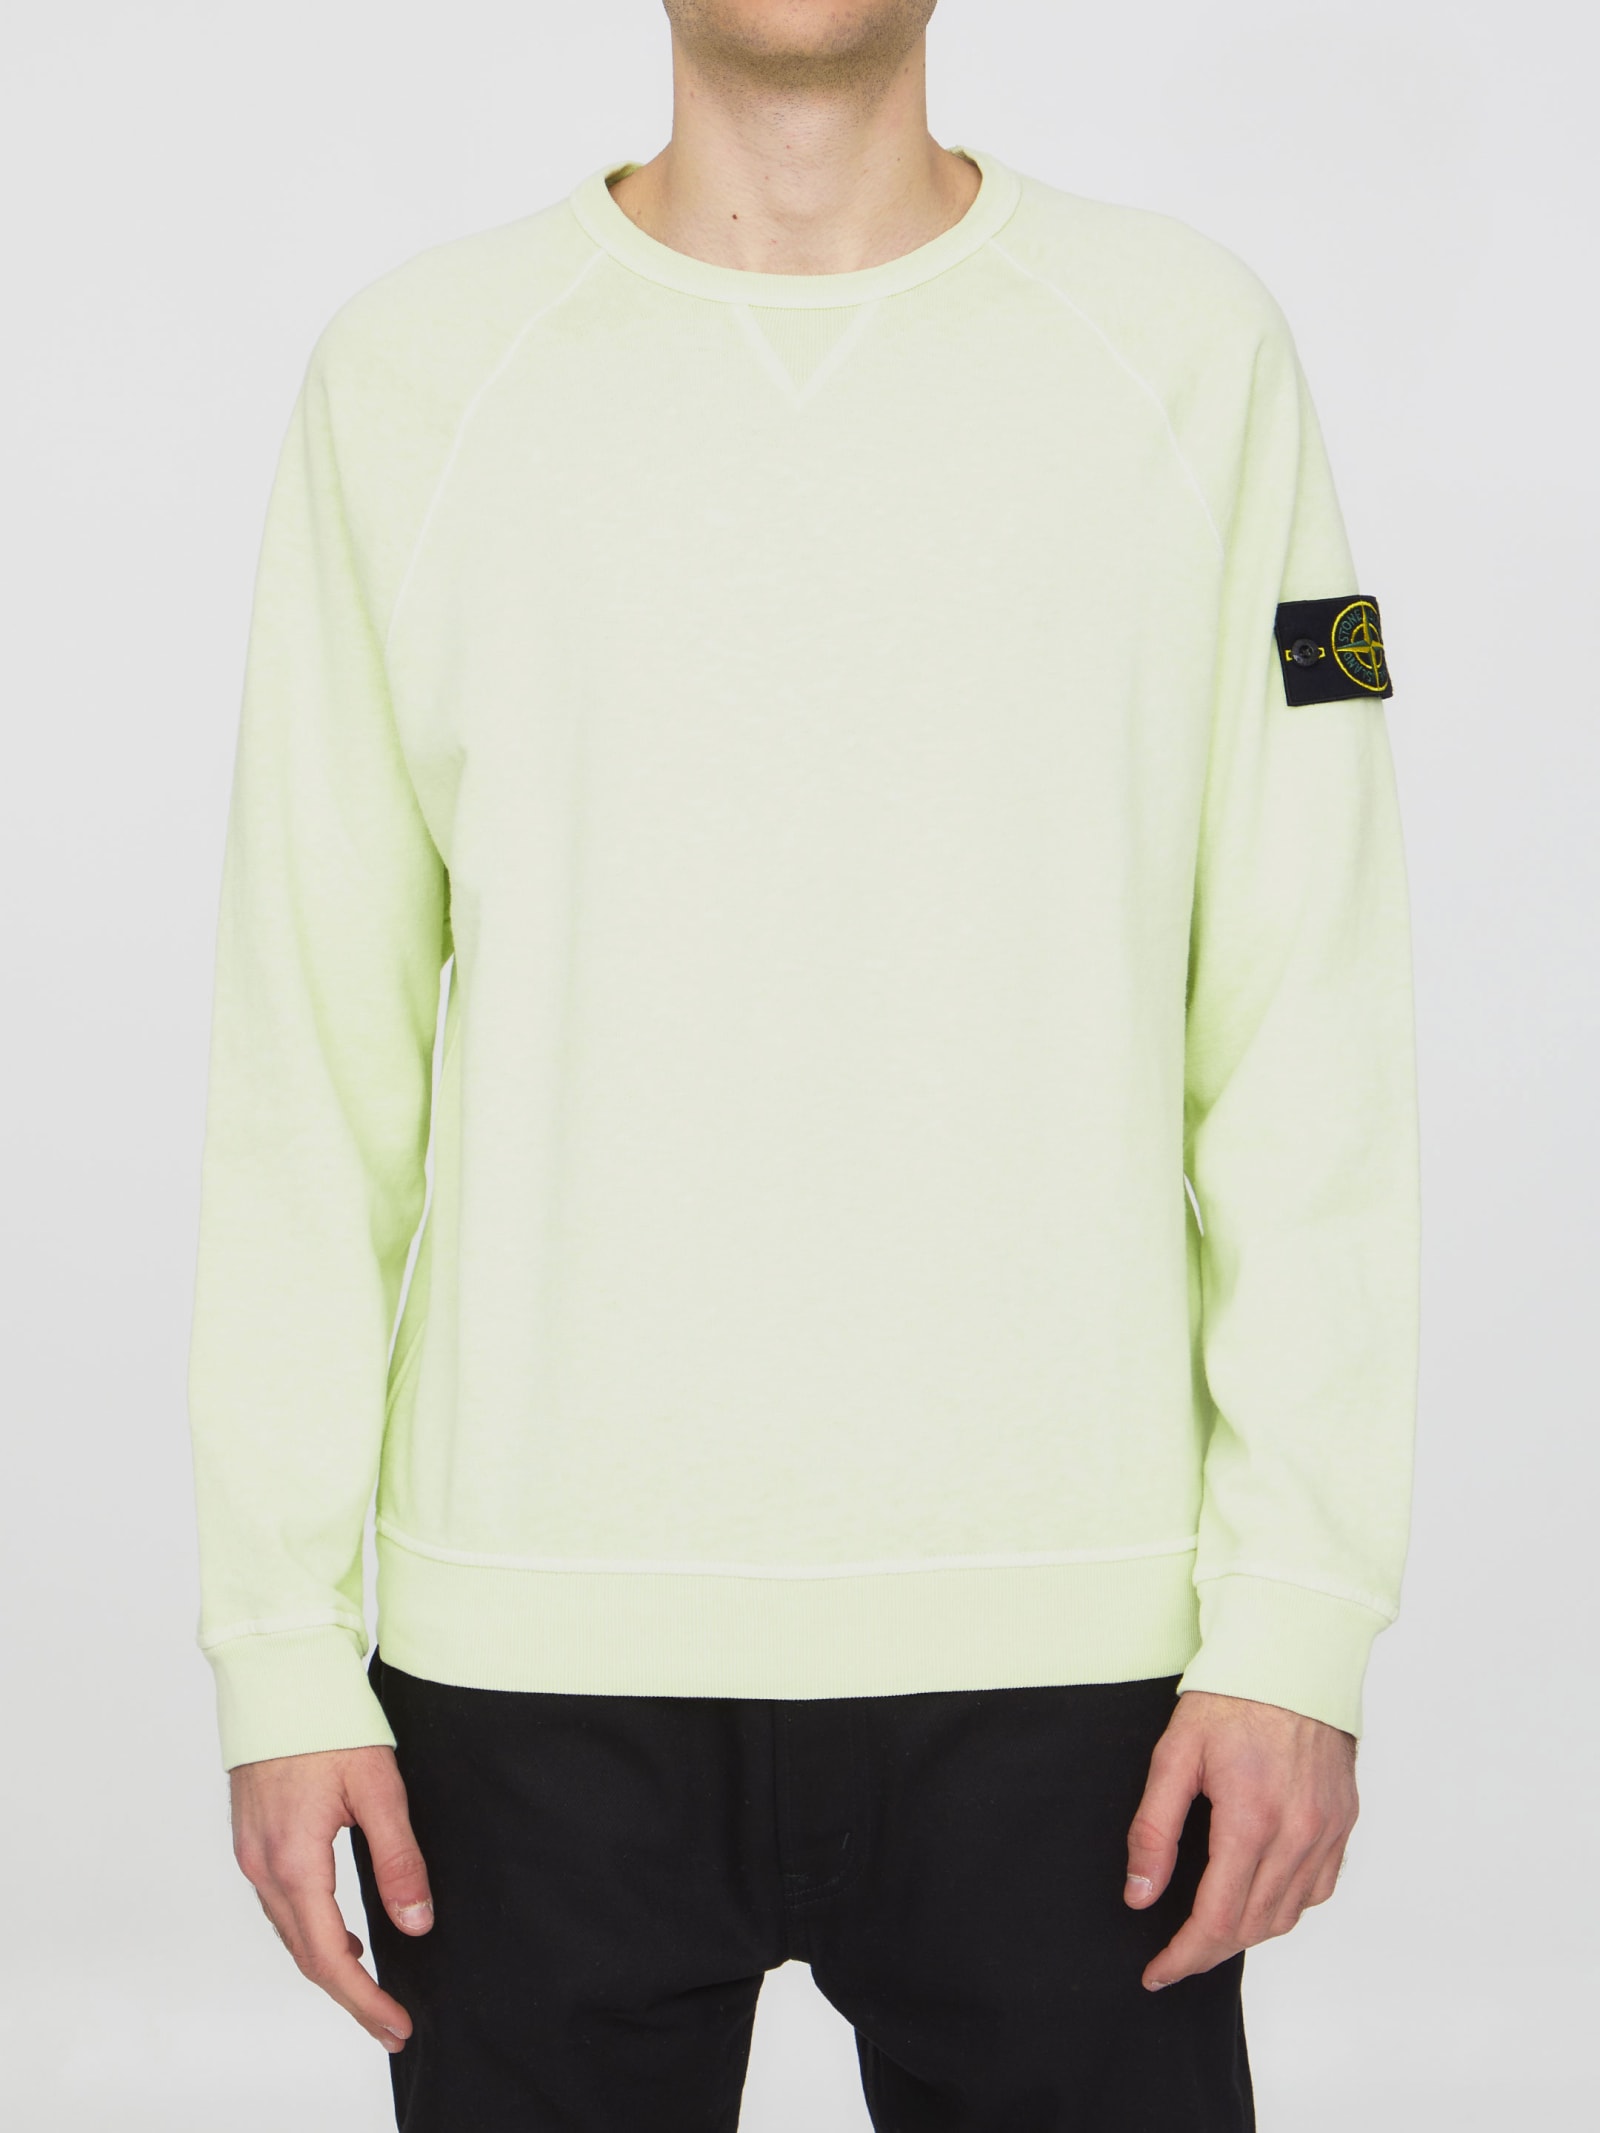 Stone Island Lime Cotton Sweatshirt